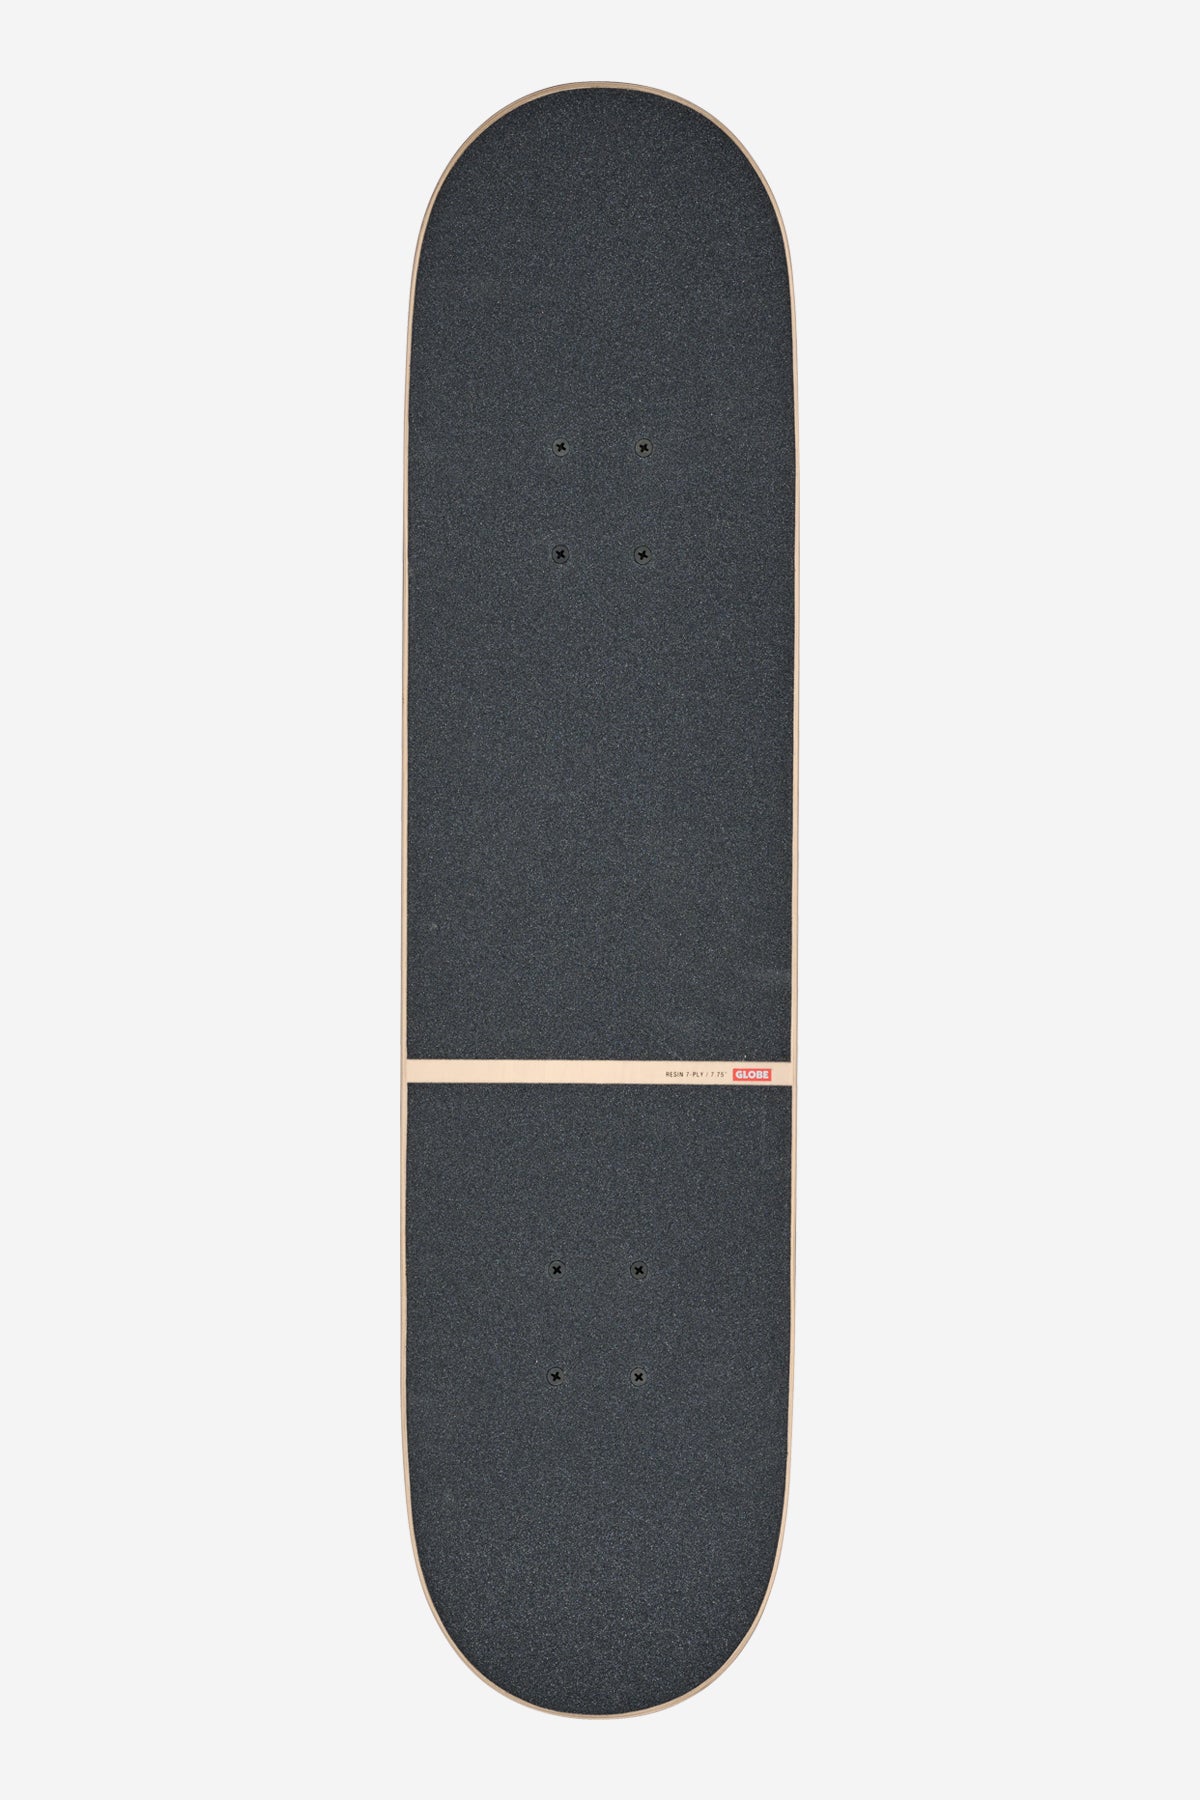 Globe - G1 Dessau - Kanäle - 7,75" Komplett Skateboard